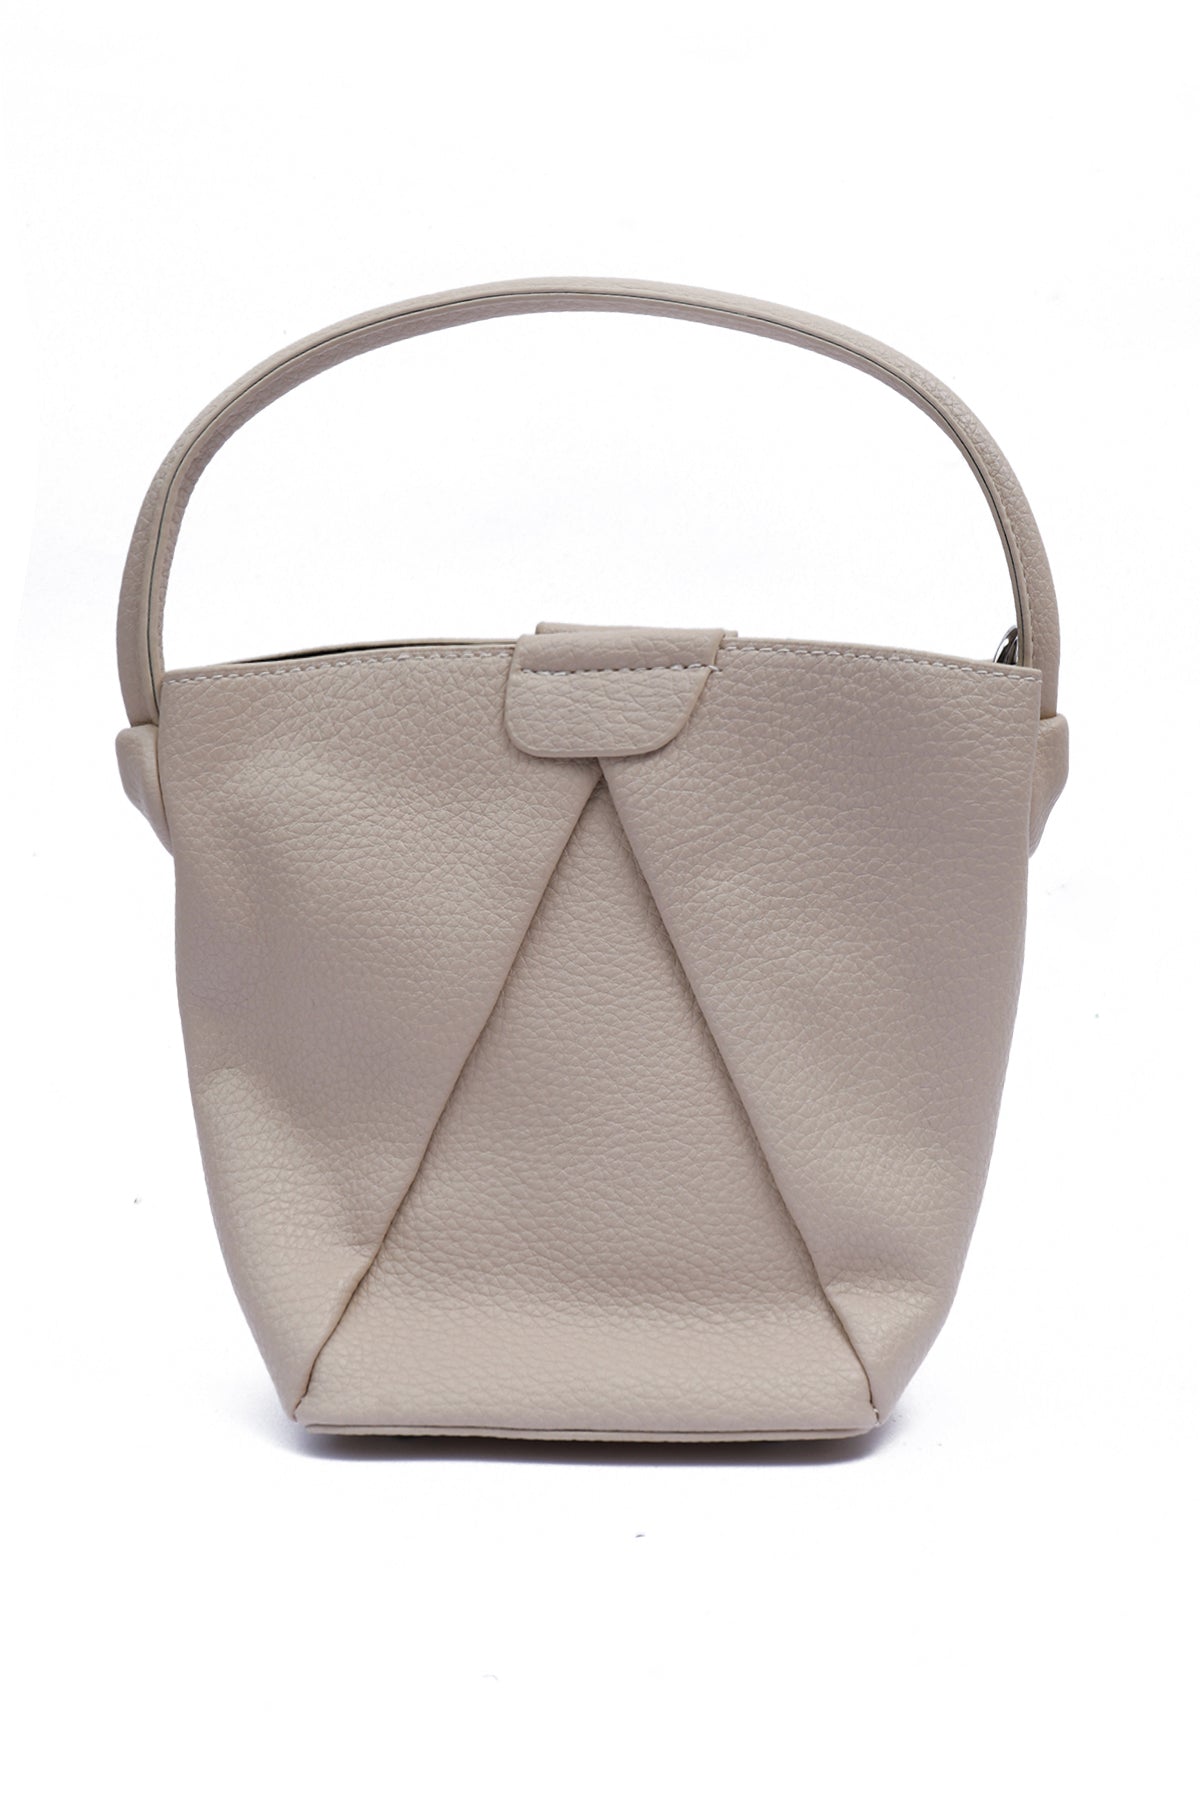 Modano Women's Casual Bag